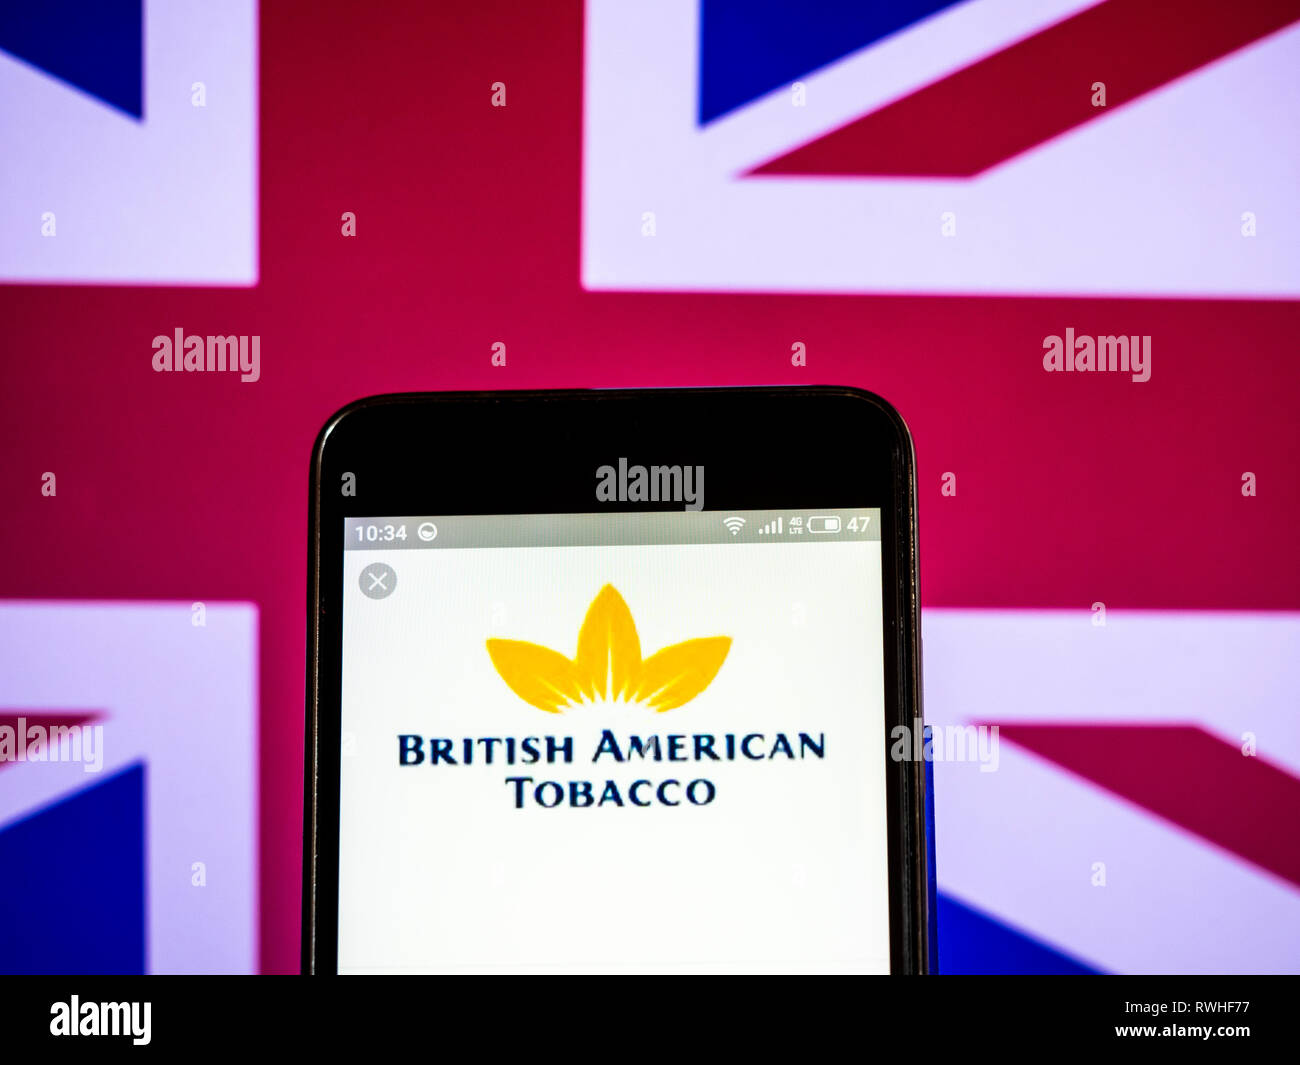 British American Tobacco company logo seen displayed on smart phone. Stock Photo